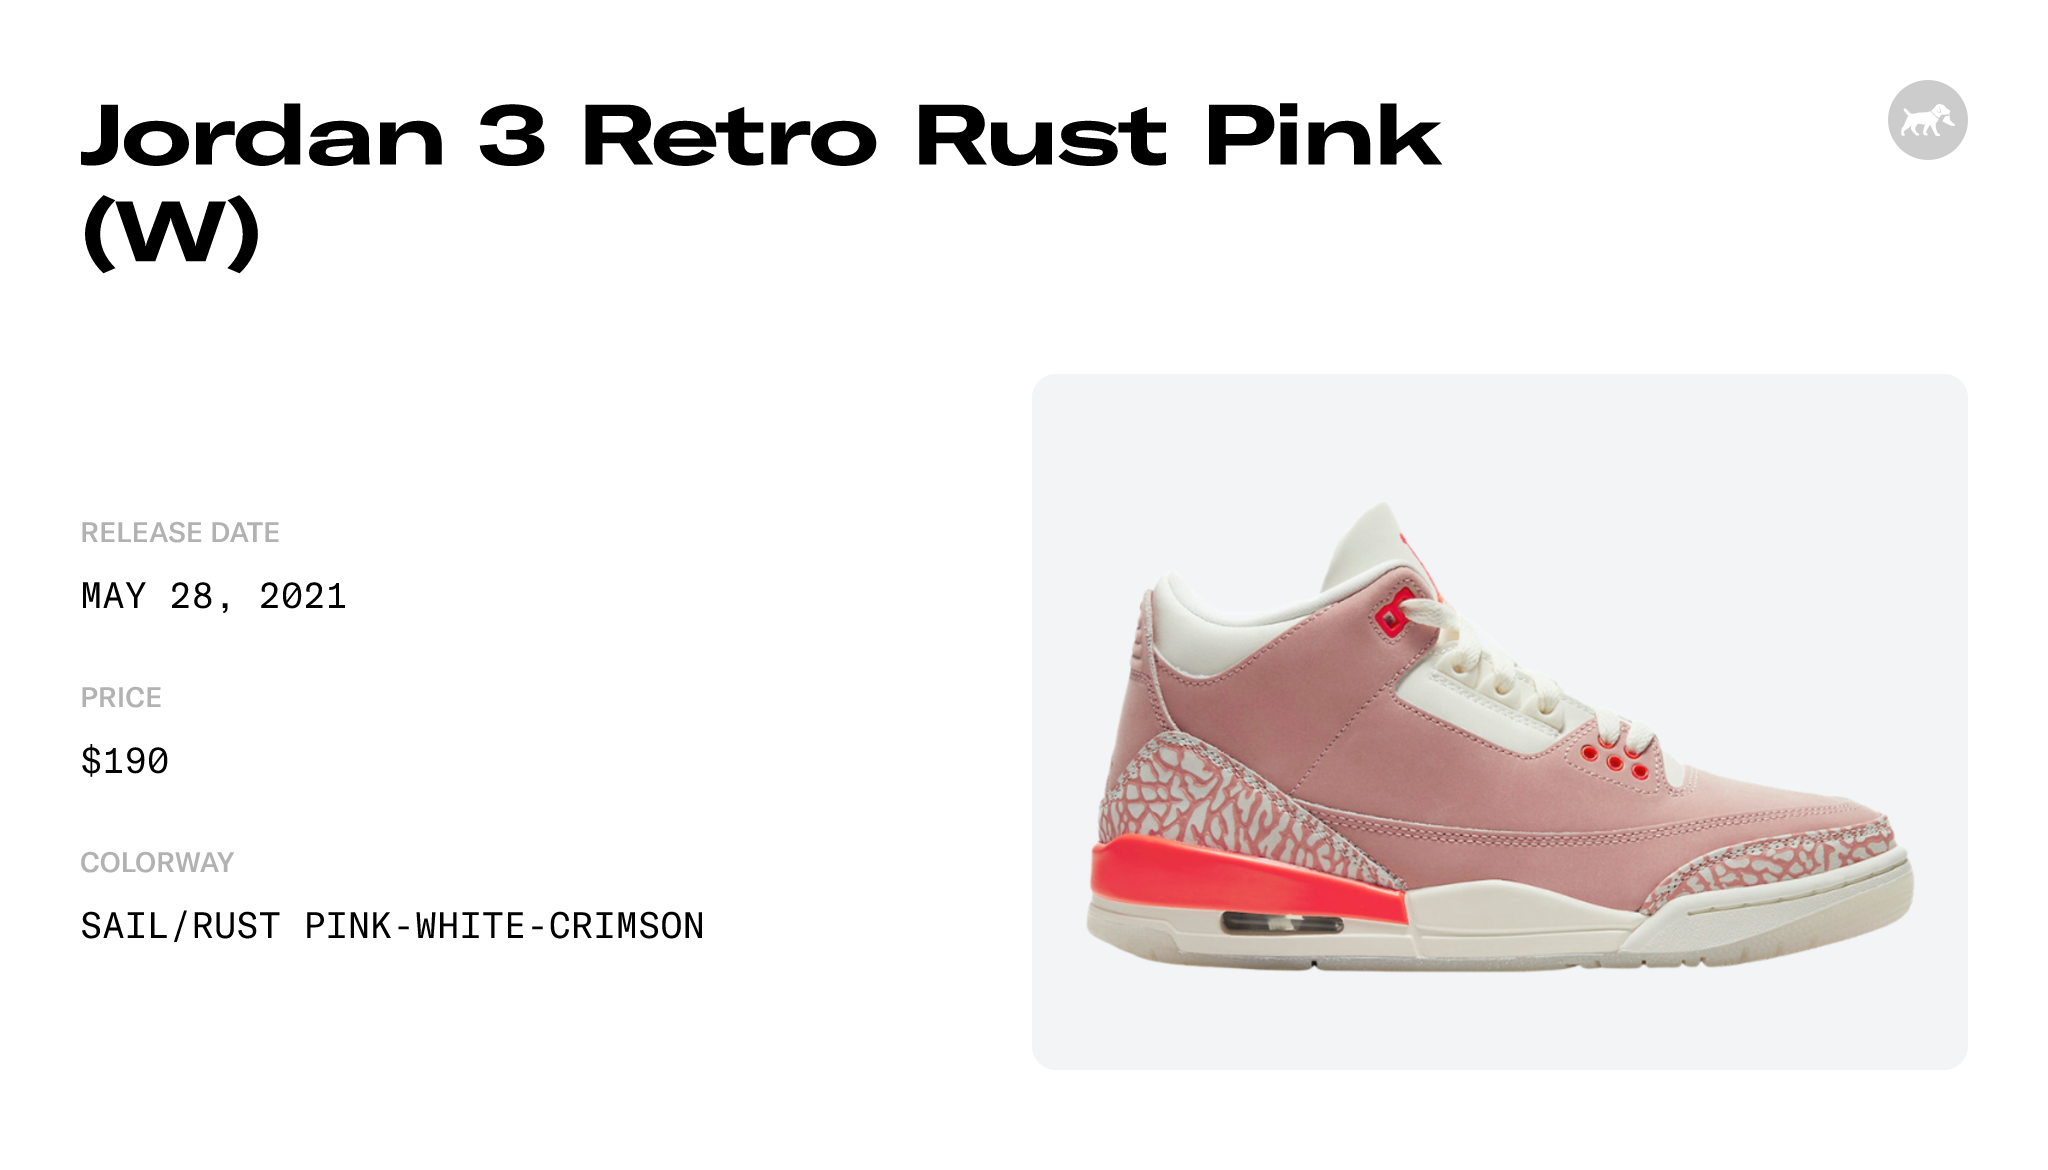 Jordan 3 Retro Rust Pink (W) - CK9246-600 Raffles and Release Date